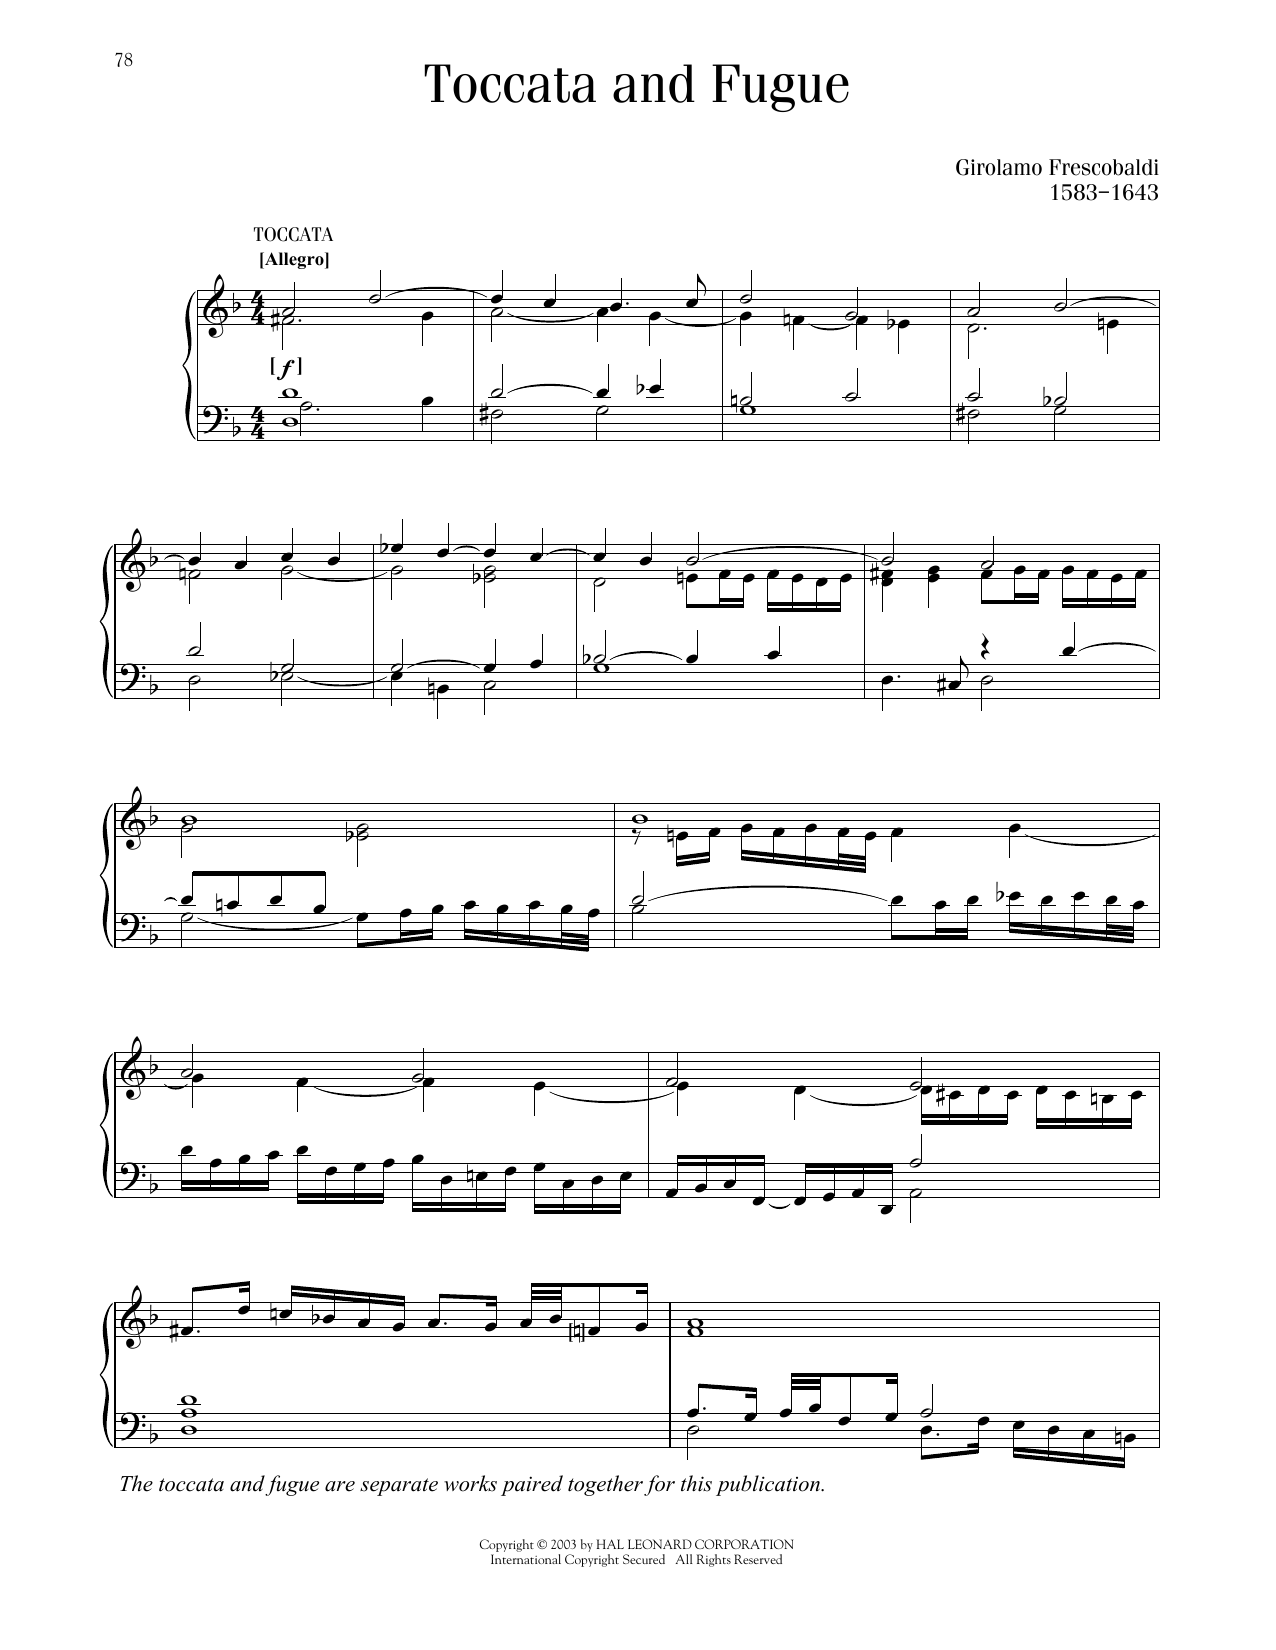 Girolamo Frescobaldi Toccata And Fugue Sheet Music Notes & Chords for Piano Solo - Download or Print PDF